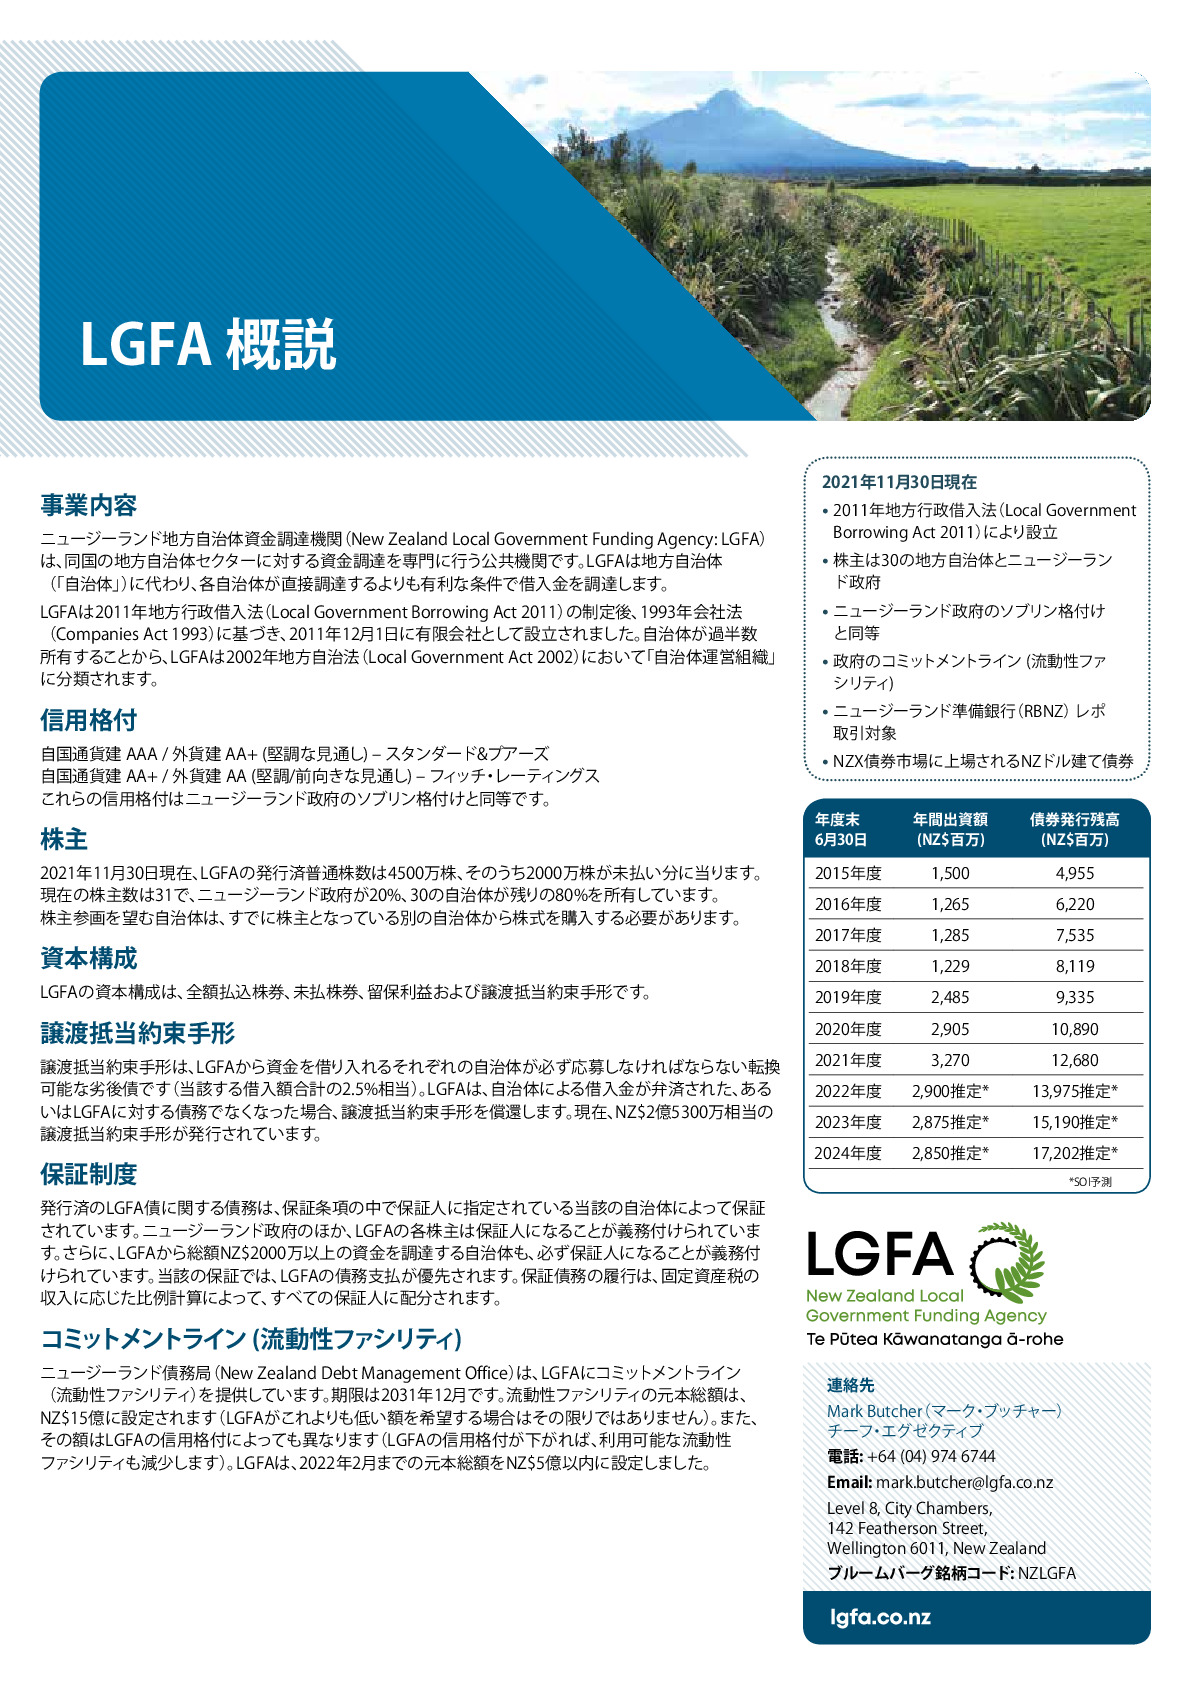 LGFA_Overview_Nov21 - Japanese